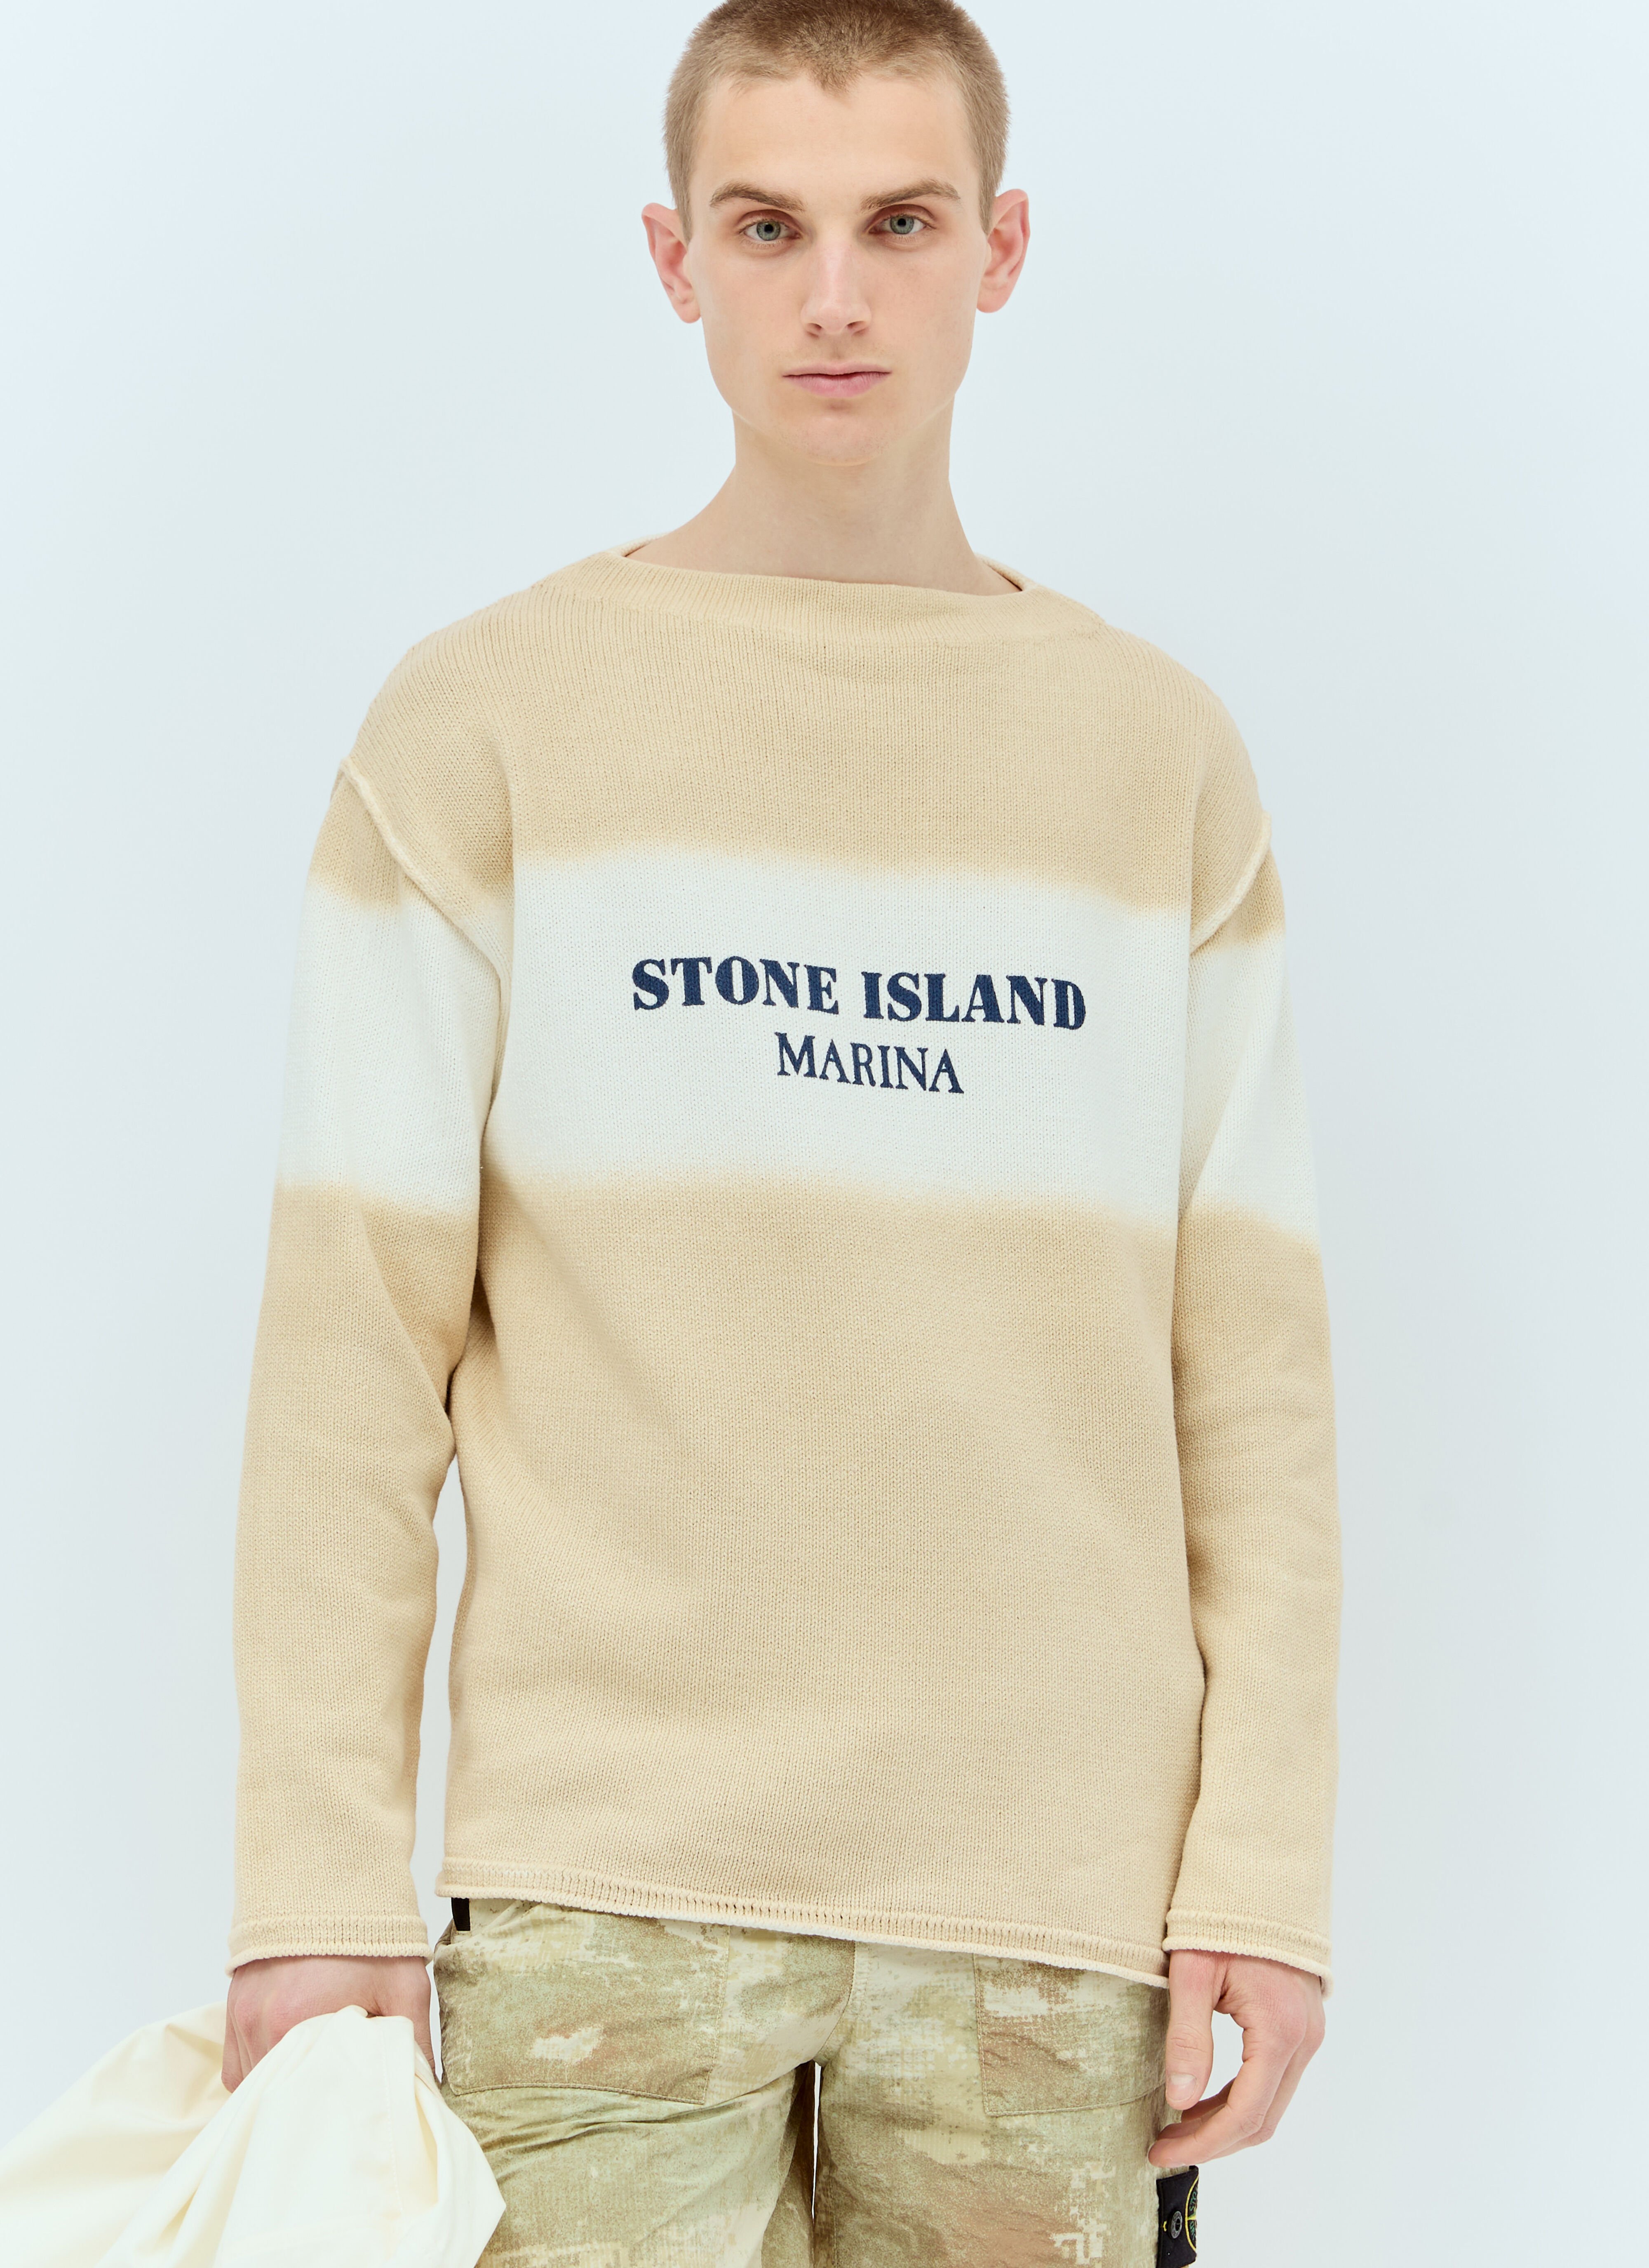 Stone Island Marina Sweater Grey sto0156026